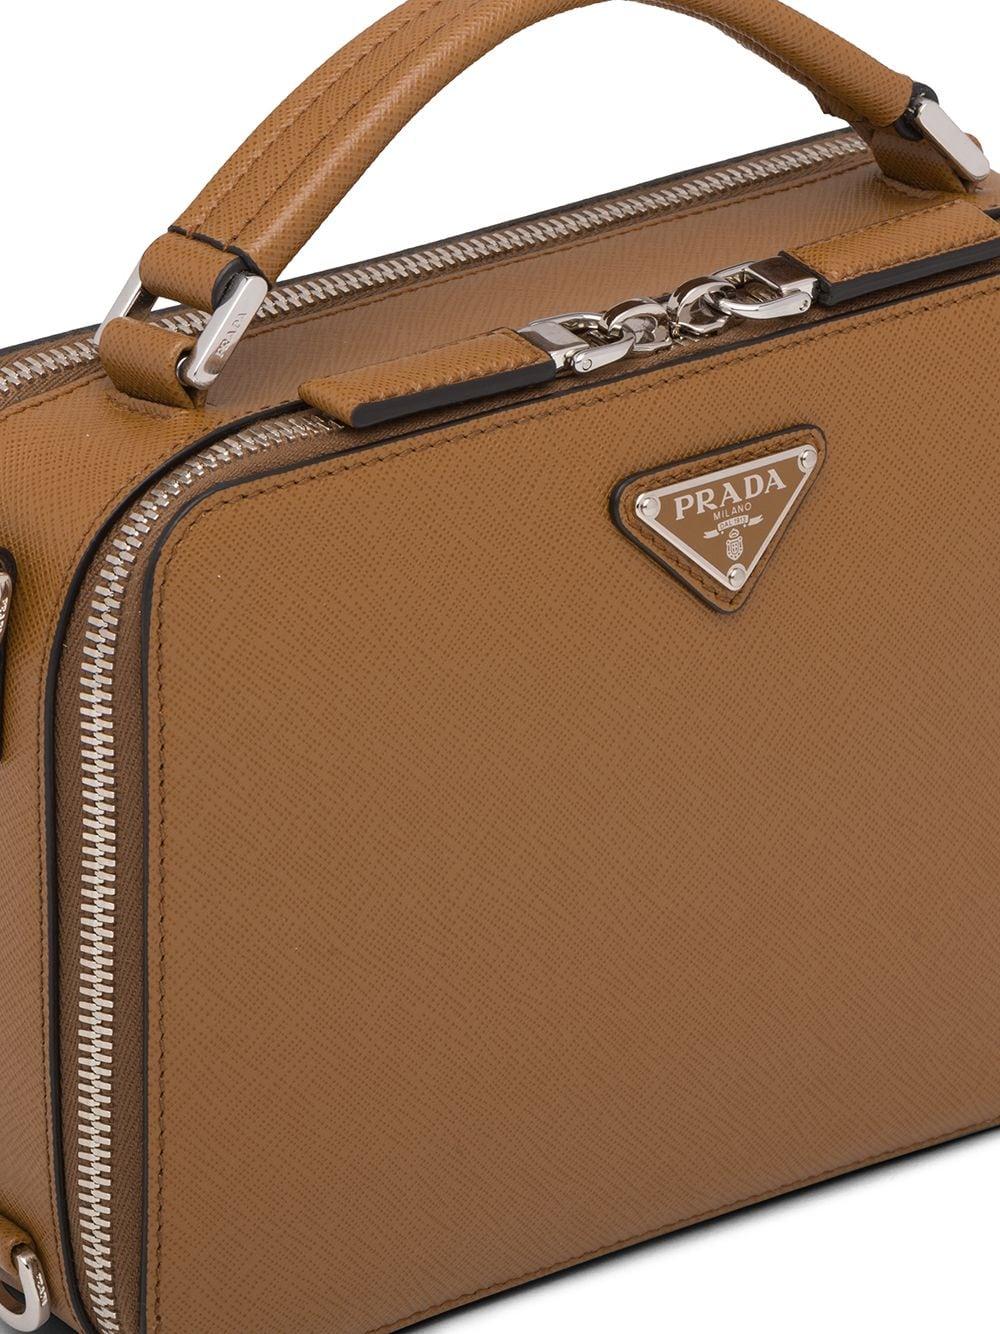 Prada Brique Saffiano Leather Messenger Bag in Brown for Men | Lyst